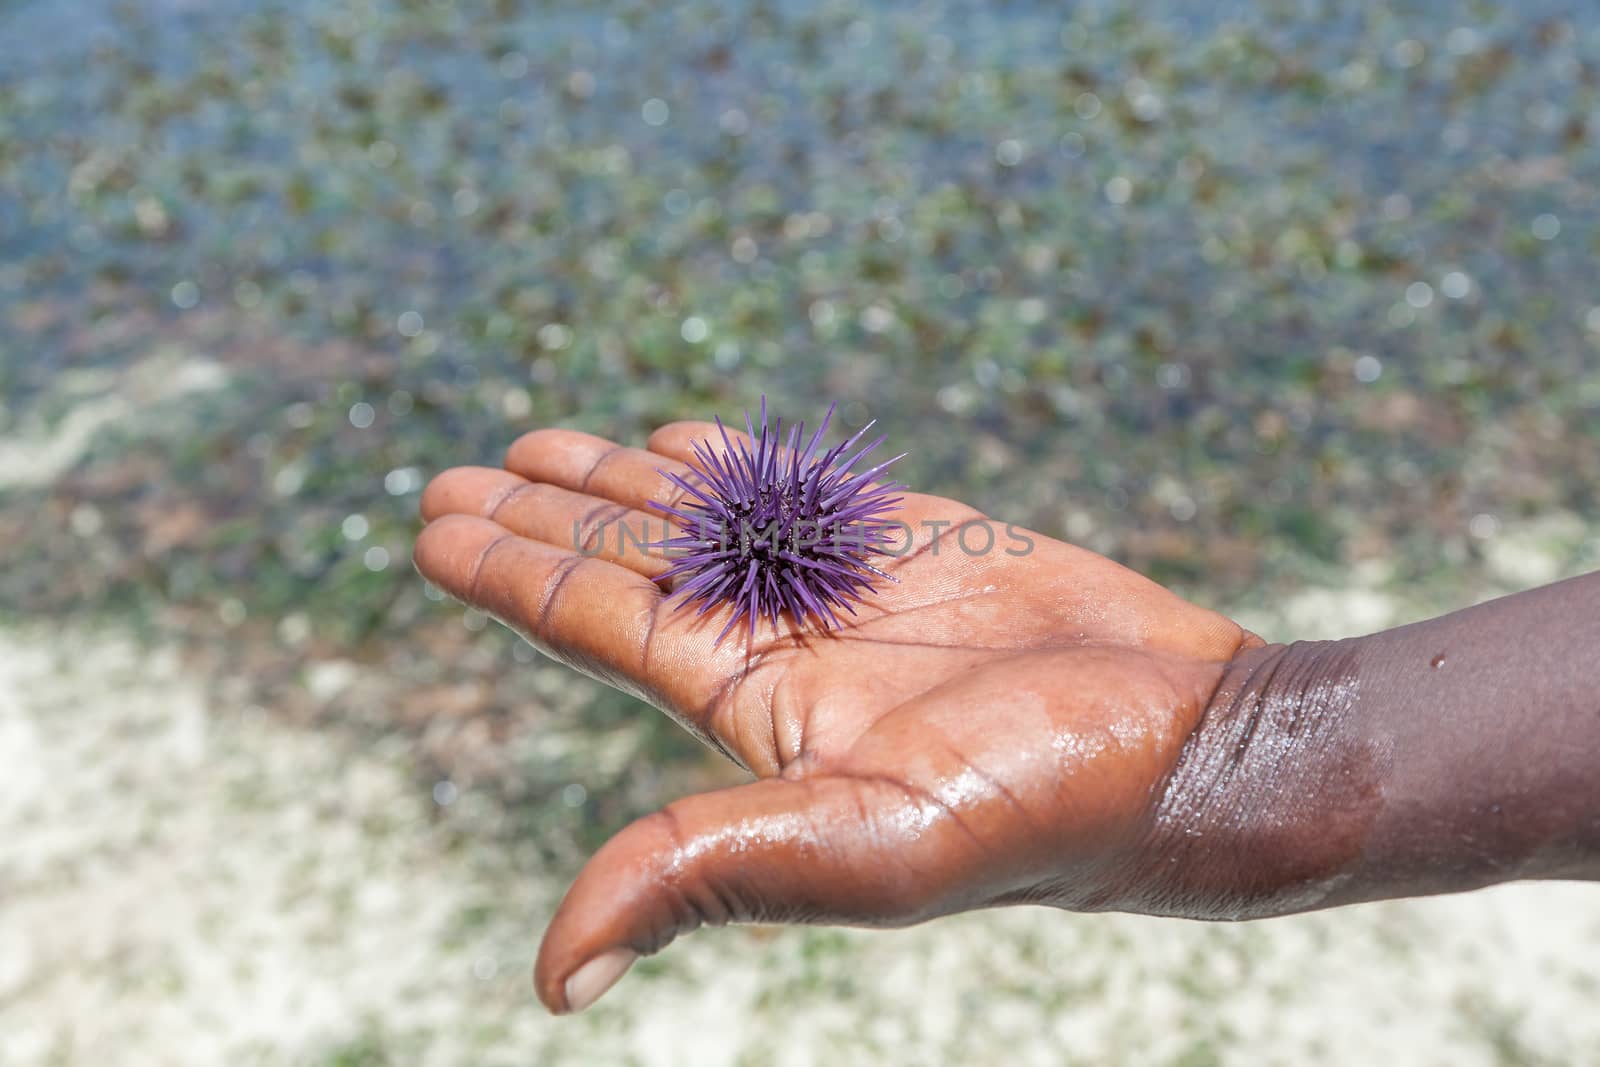 The small purple sea hedgehog lays on a man's hand